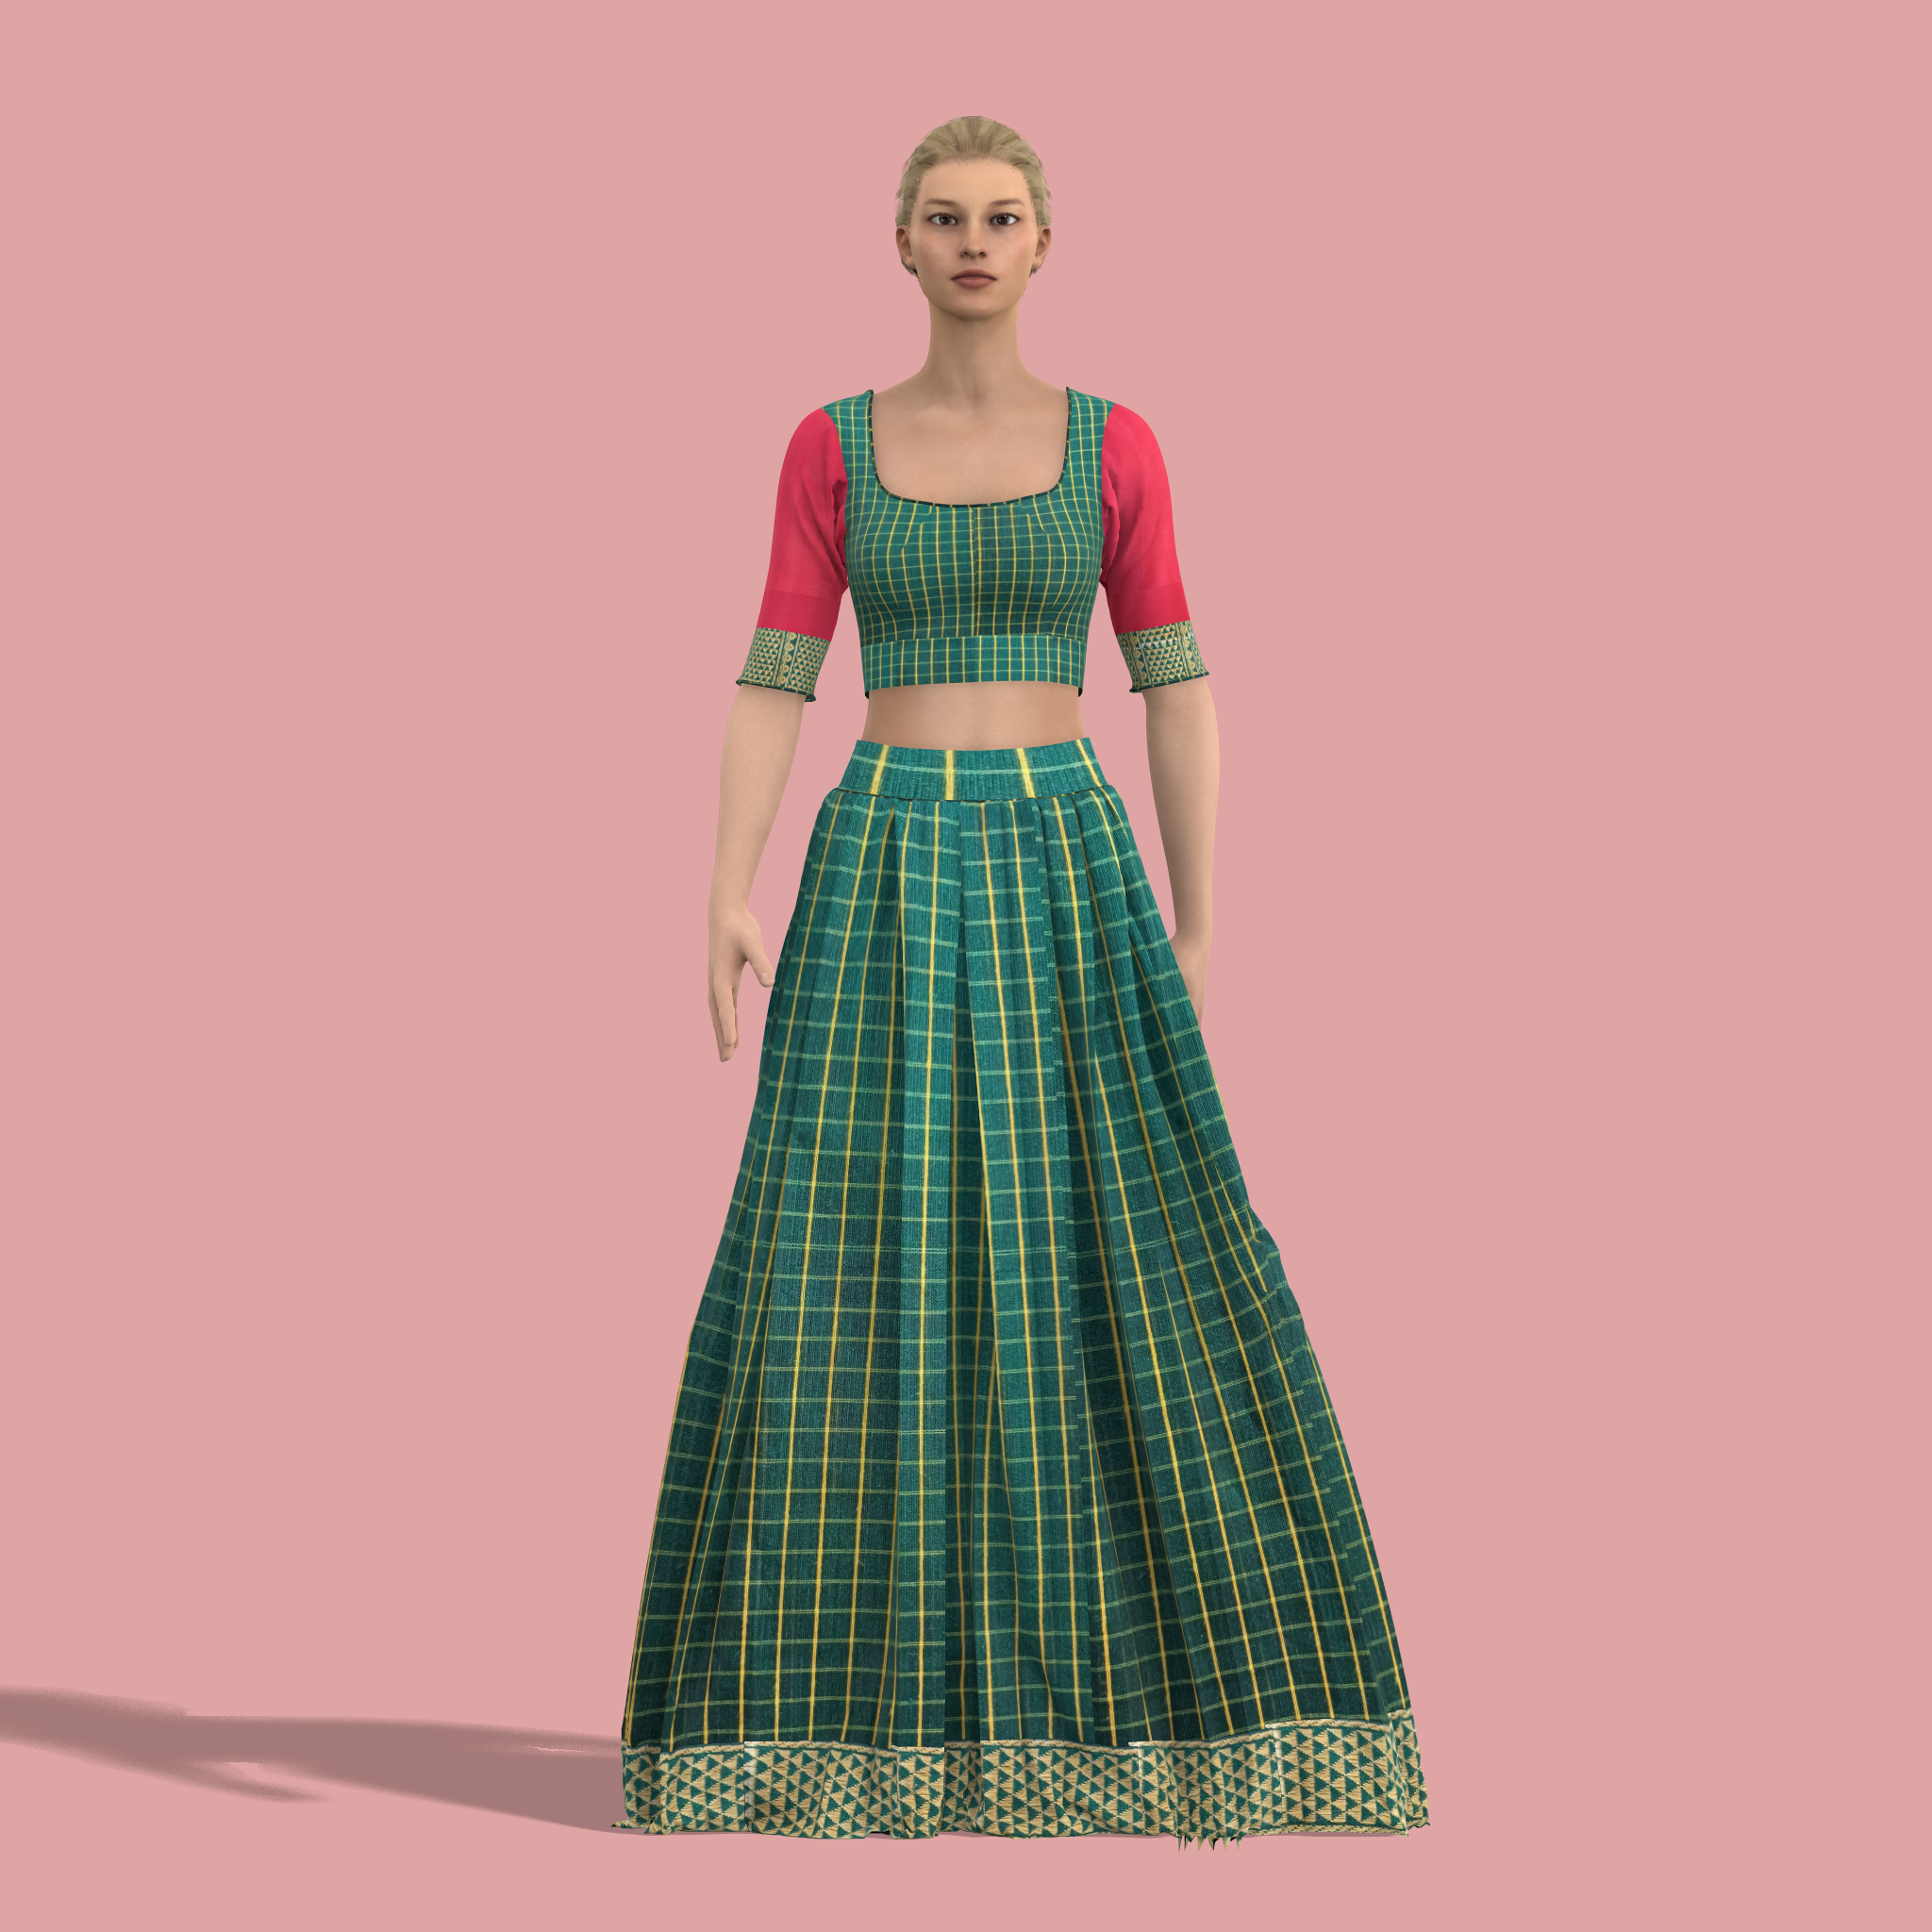 All Dress Salwar Suit Saree Blouse Lehenga Choli Stitching Service  Available | eBay